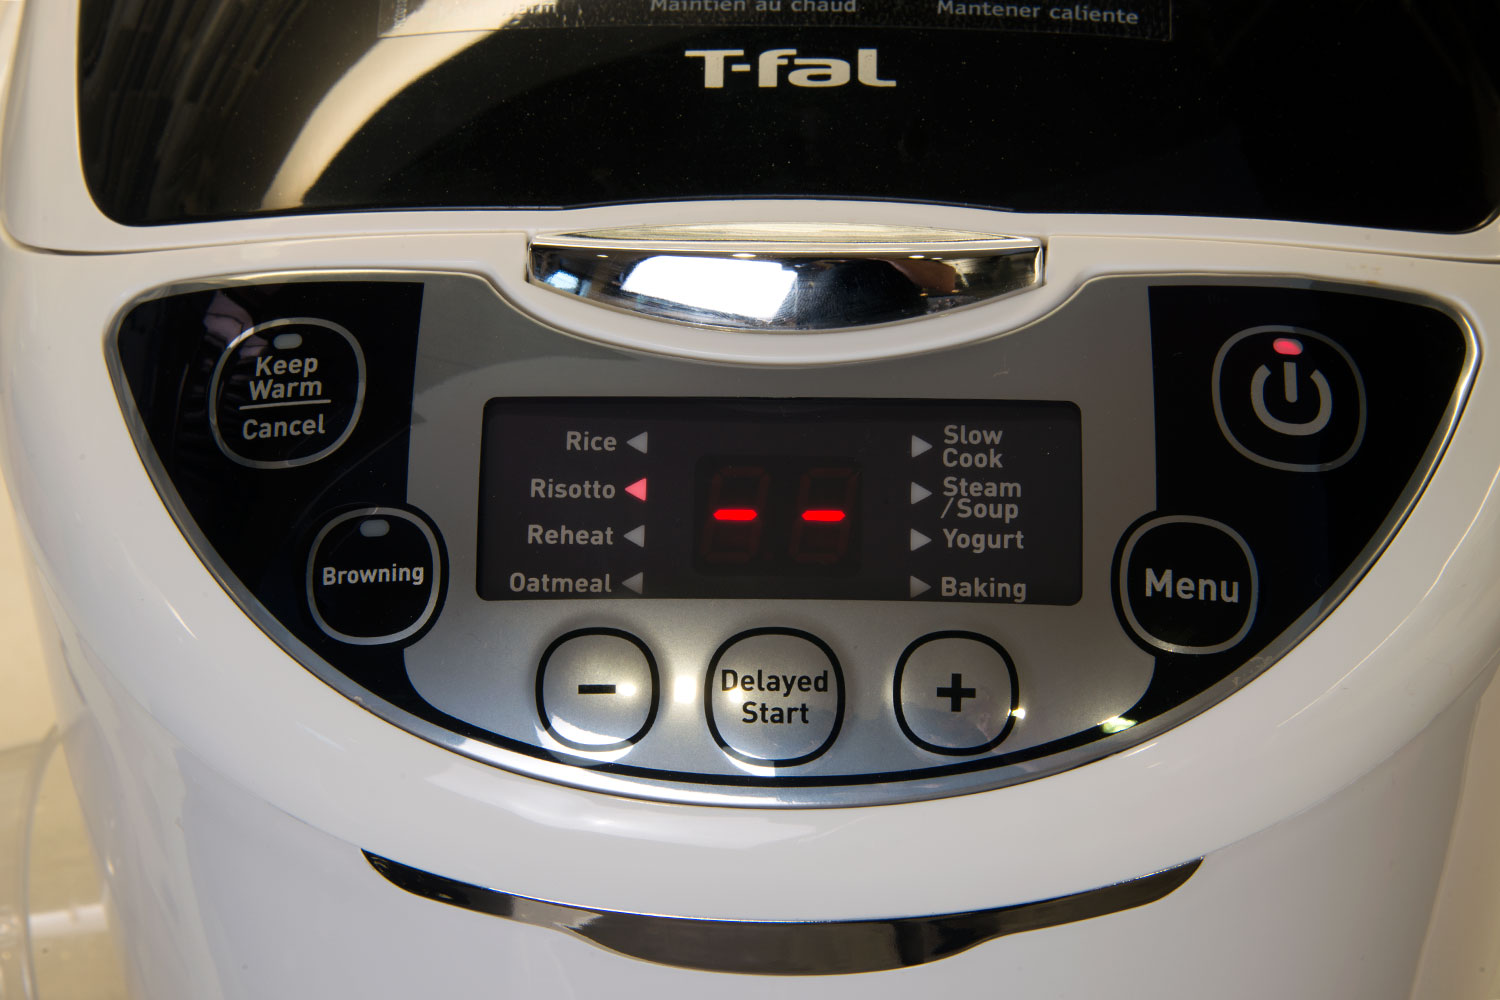 Kitchen appliances and home appliances - T-fal